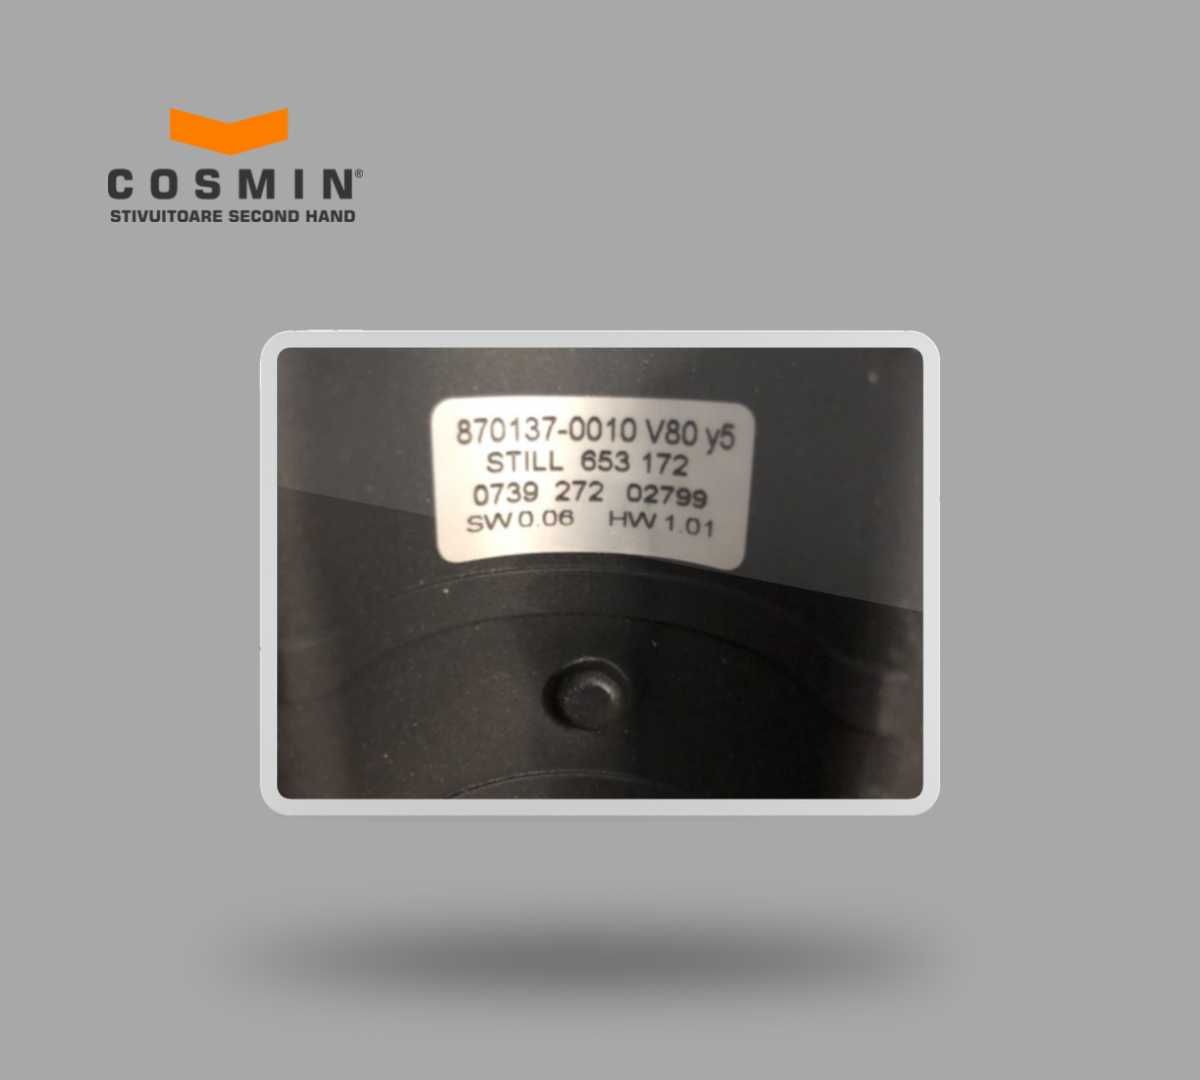 Piese stivuitoare - Consola RX50 - Stivuitor Still